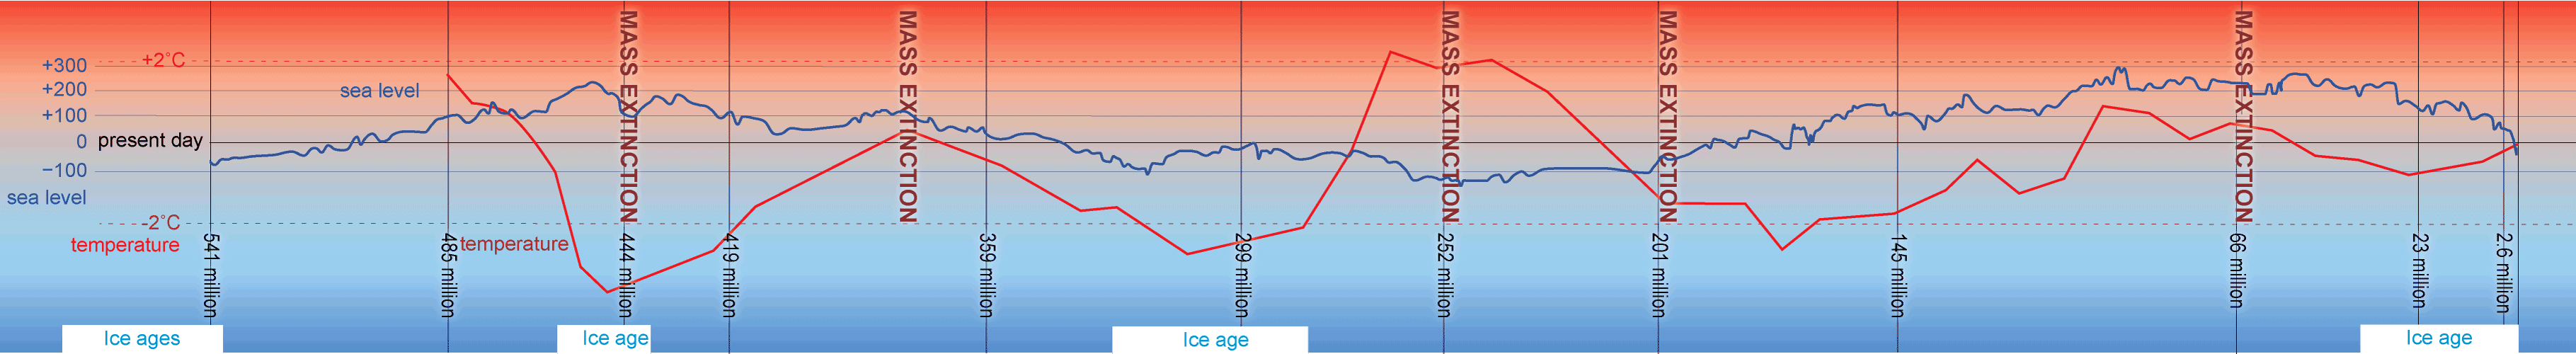 Temperature and sea level timeline